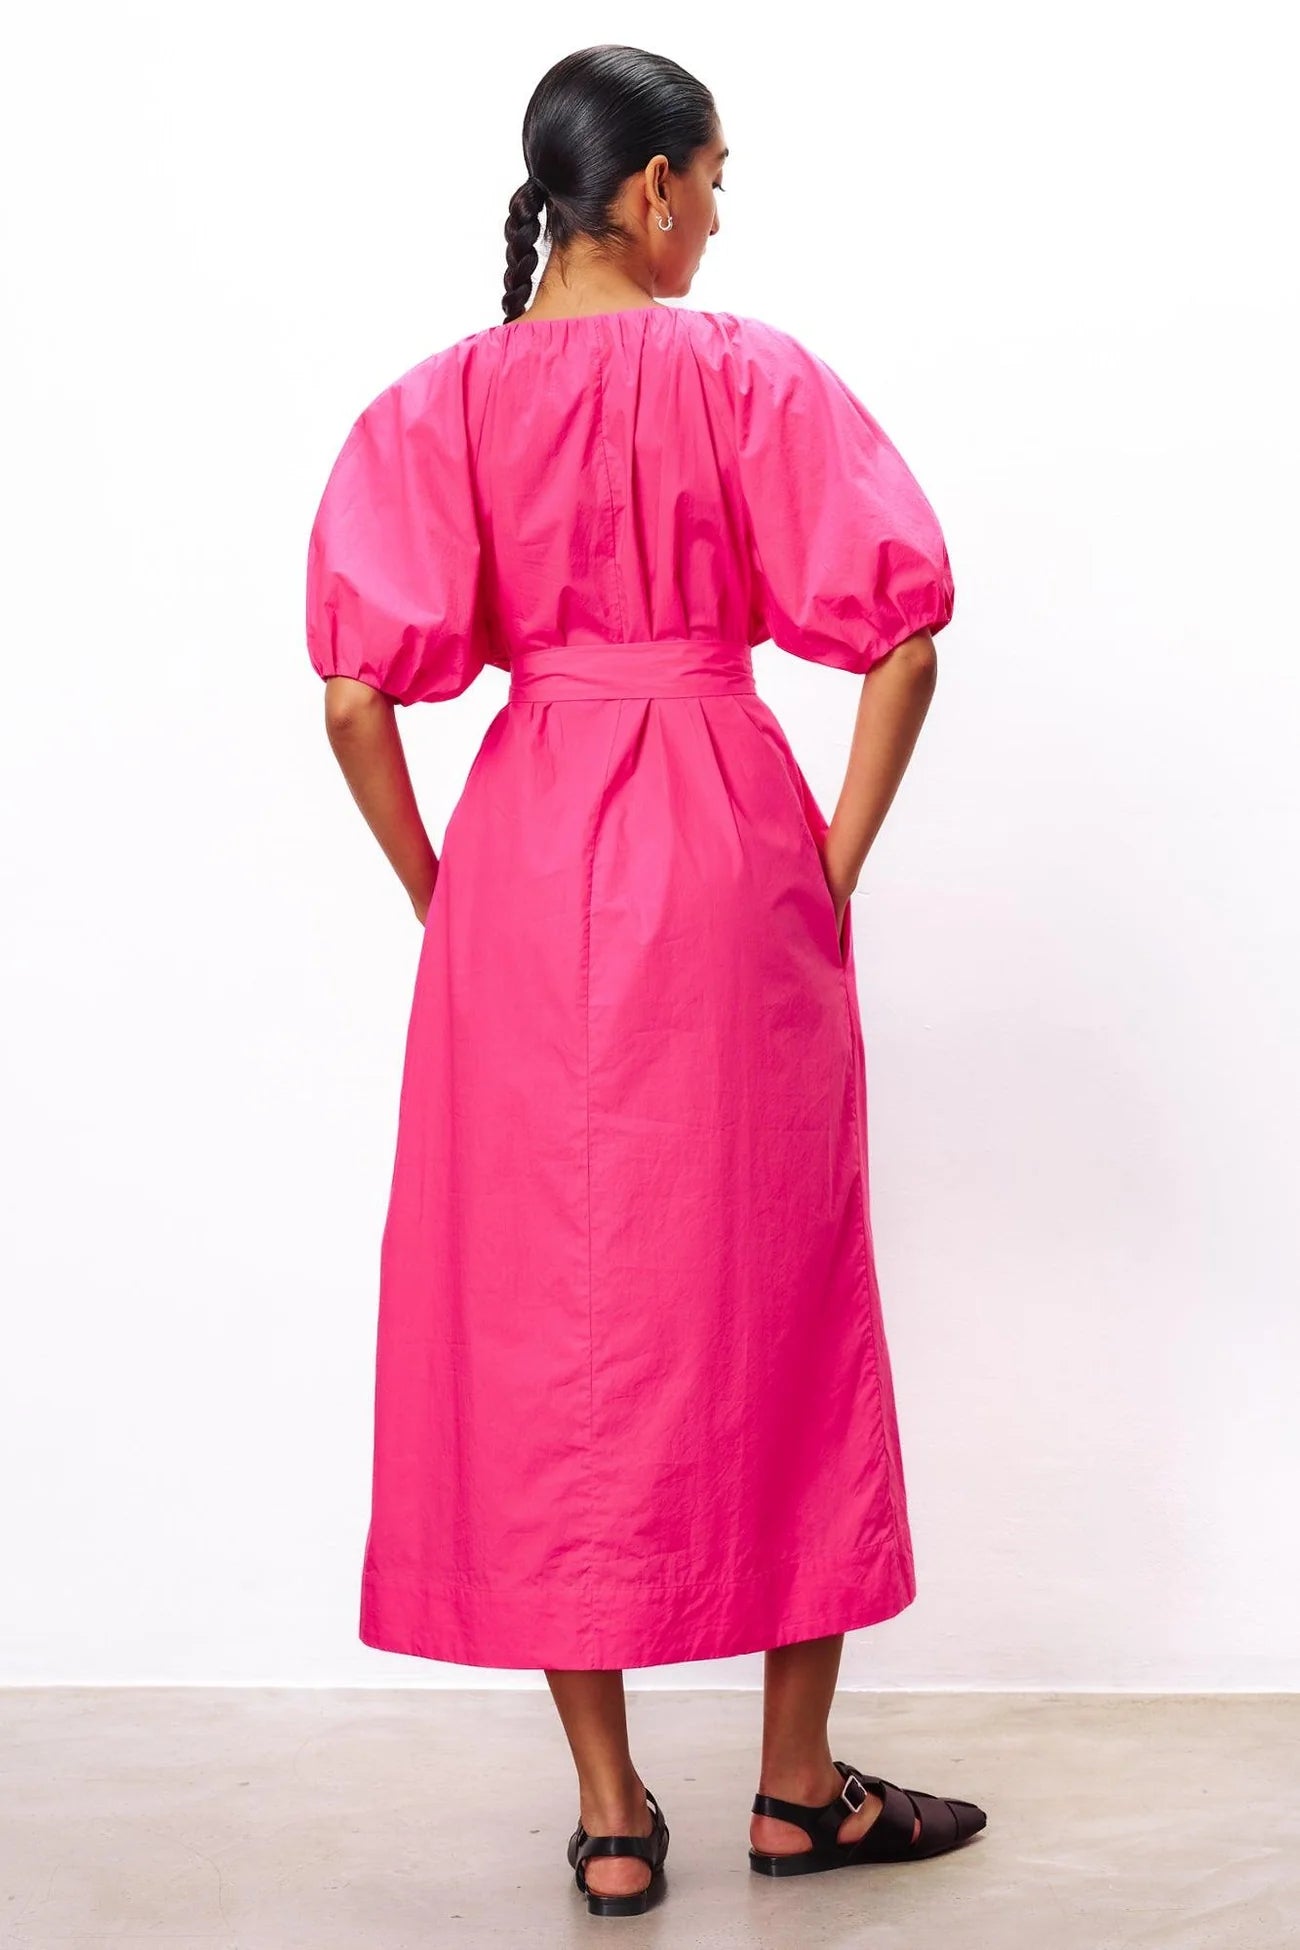 Alora Dress in Hot Pink